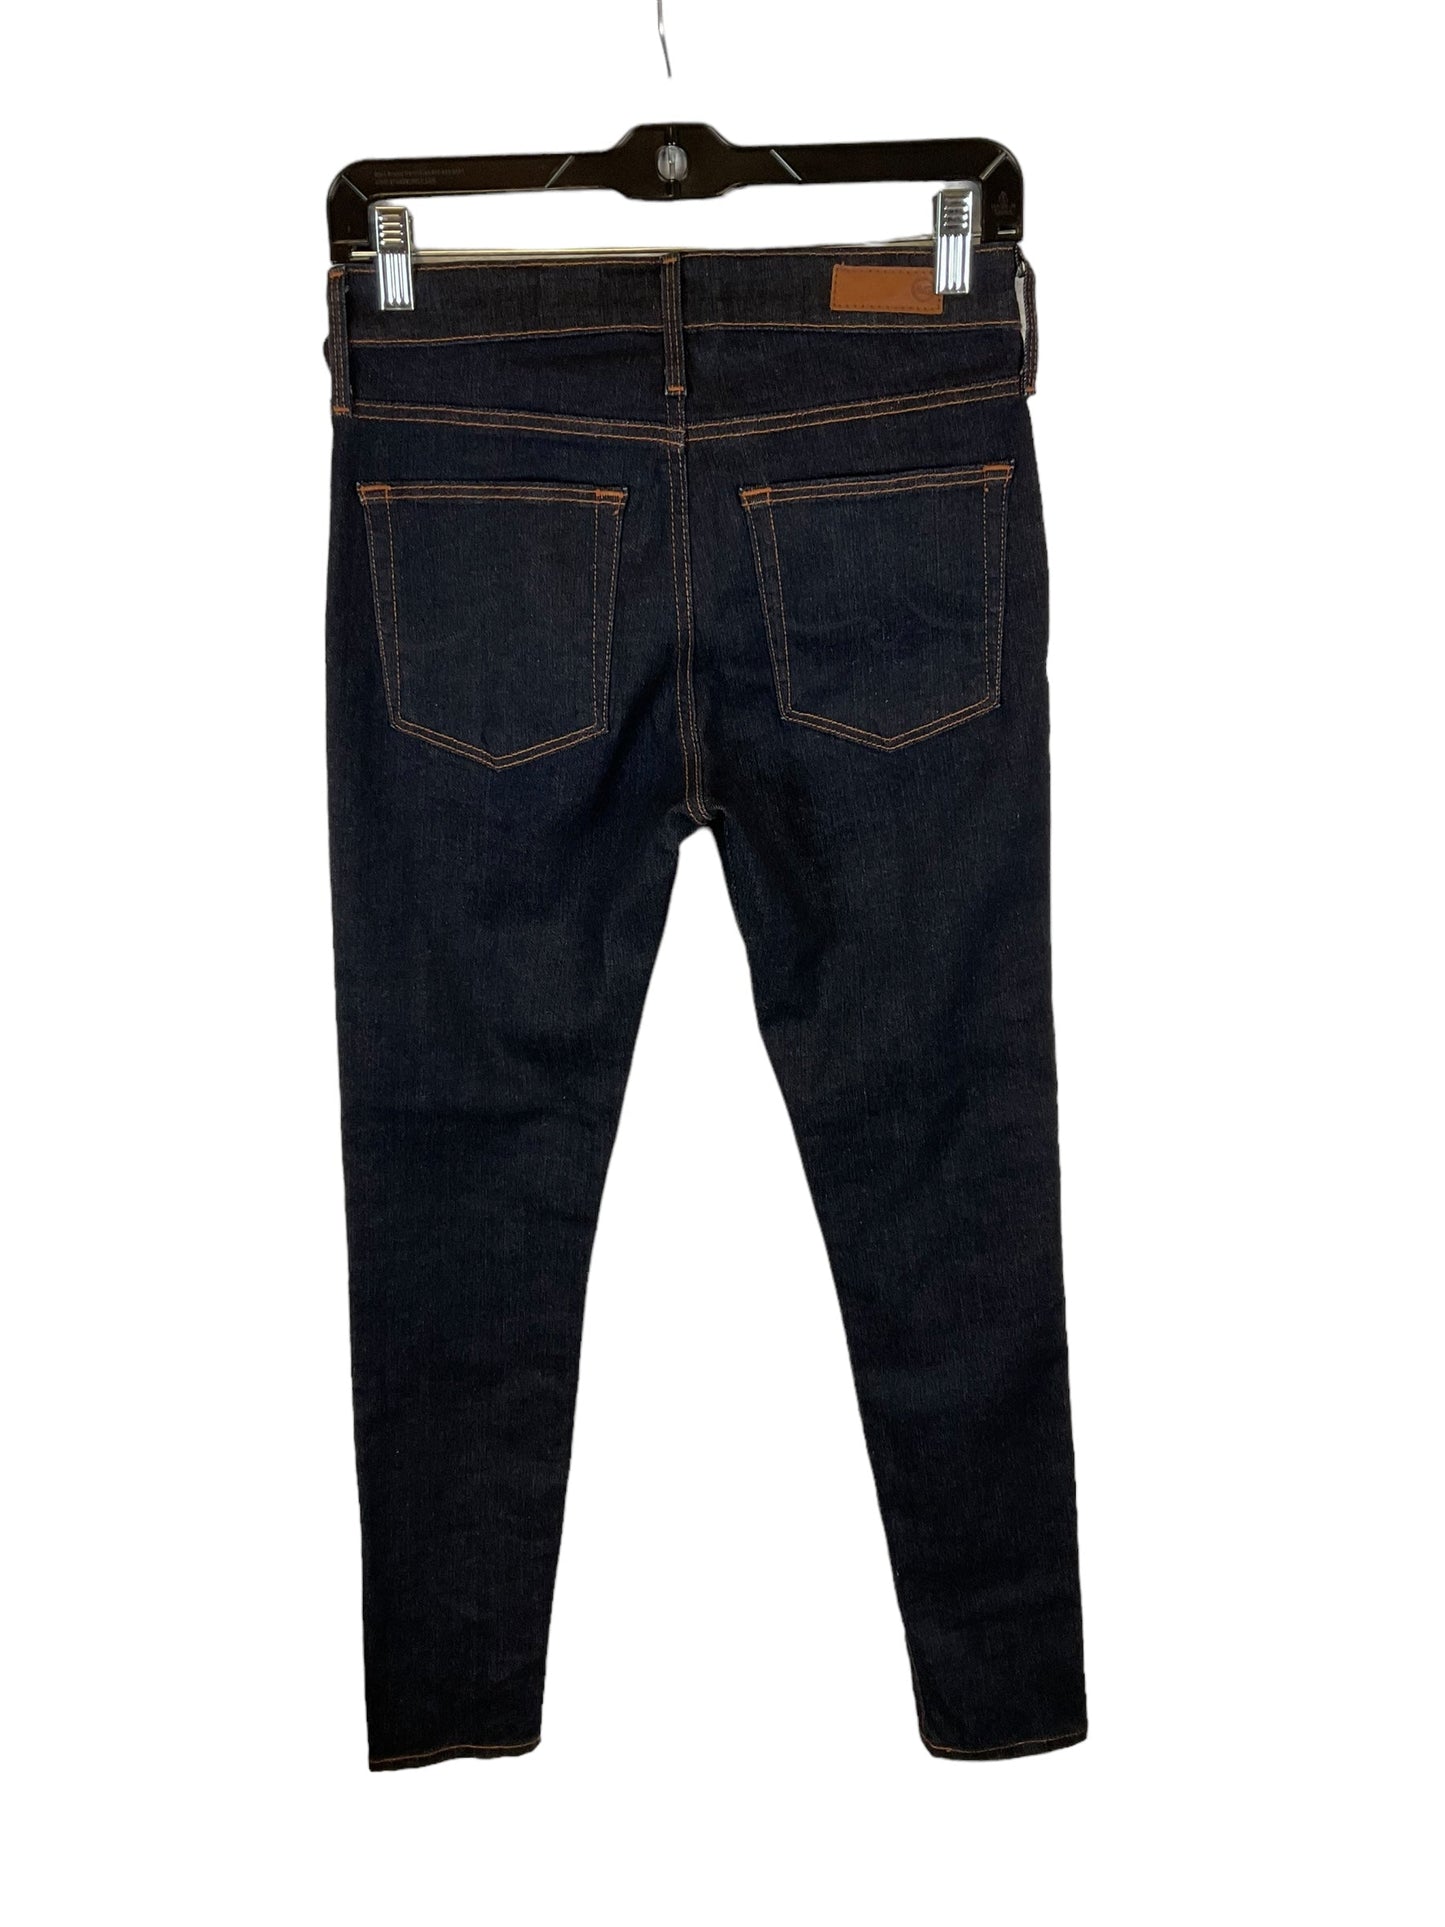 Blue Denim Jeans Designer Adriano Goldschmied, Size 4